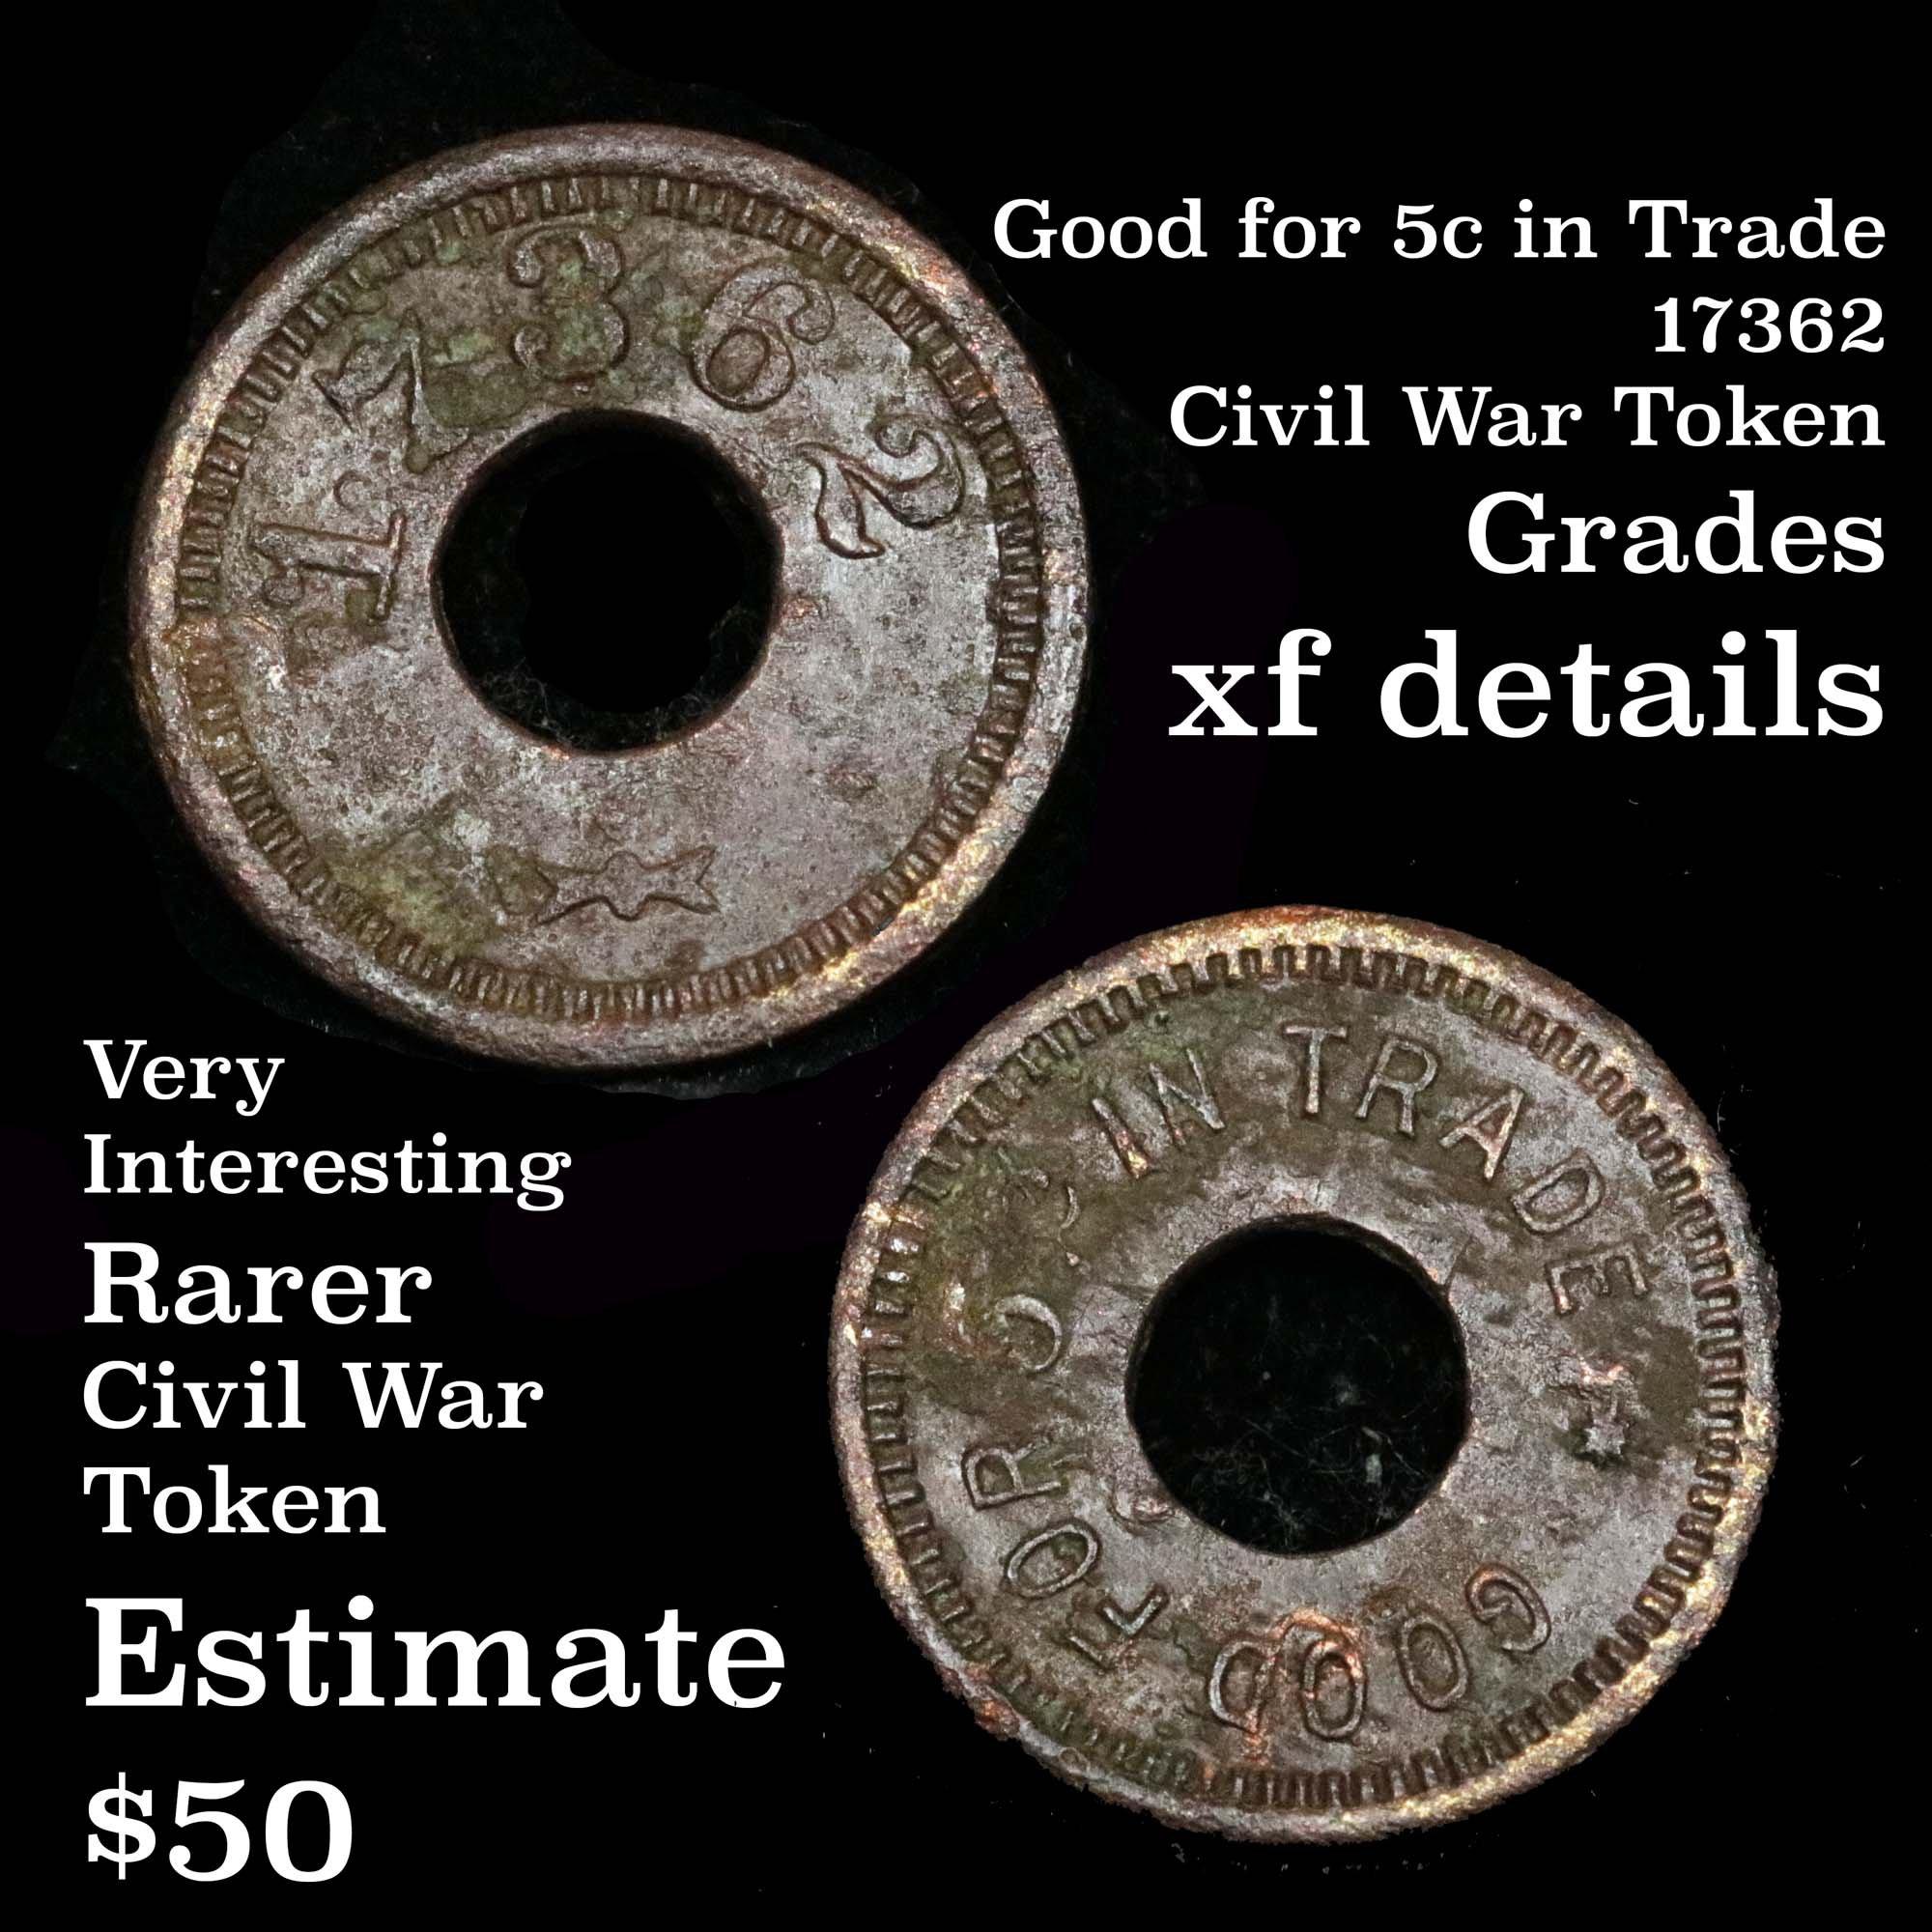 Cool Token Good for 5c in Trade, 17362 Civil War Token Grades xf details